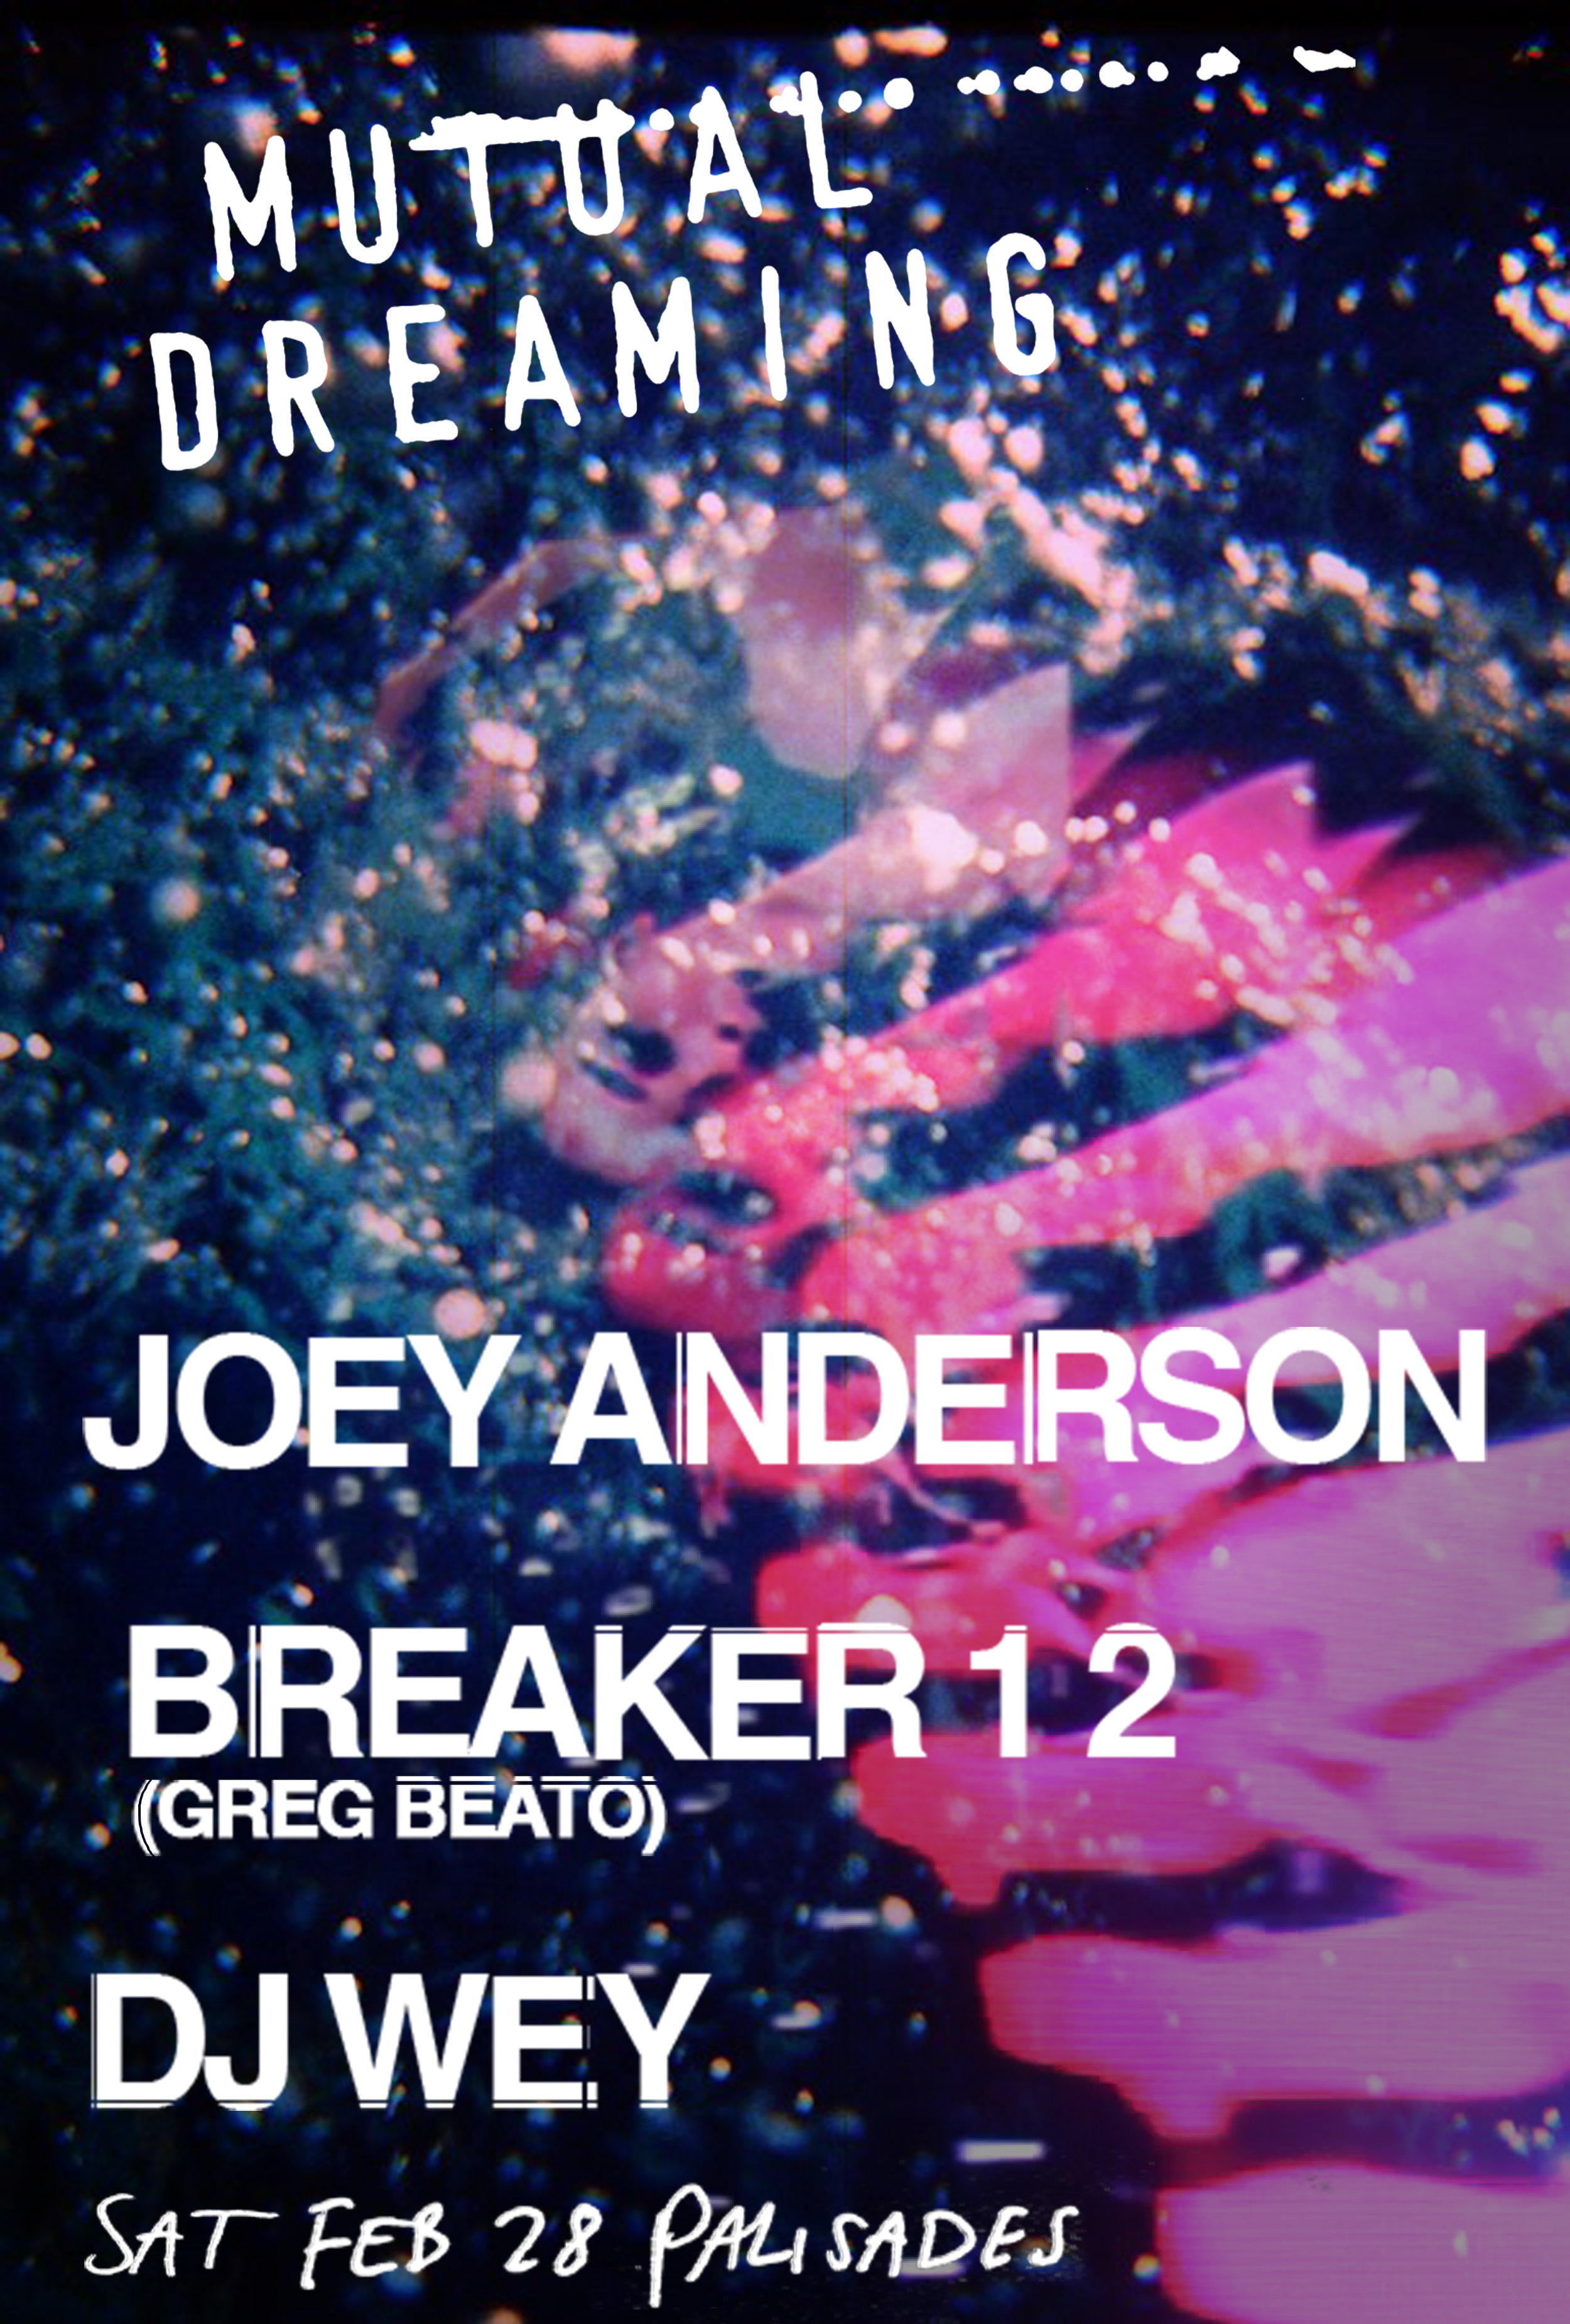    Mutual Dreaming: Joey Anderson, Breaker 1 2 (Greg Beato), DJ Wey     February 2015 